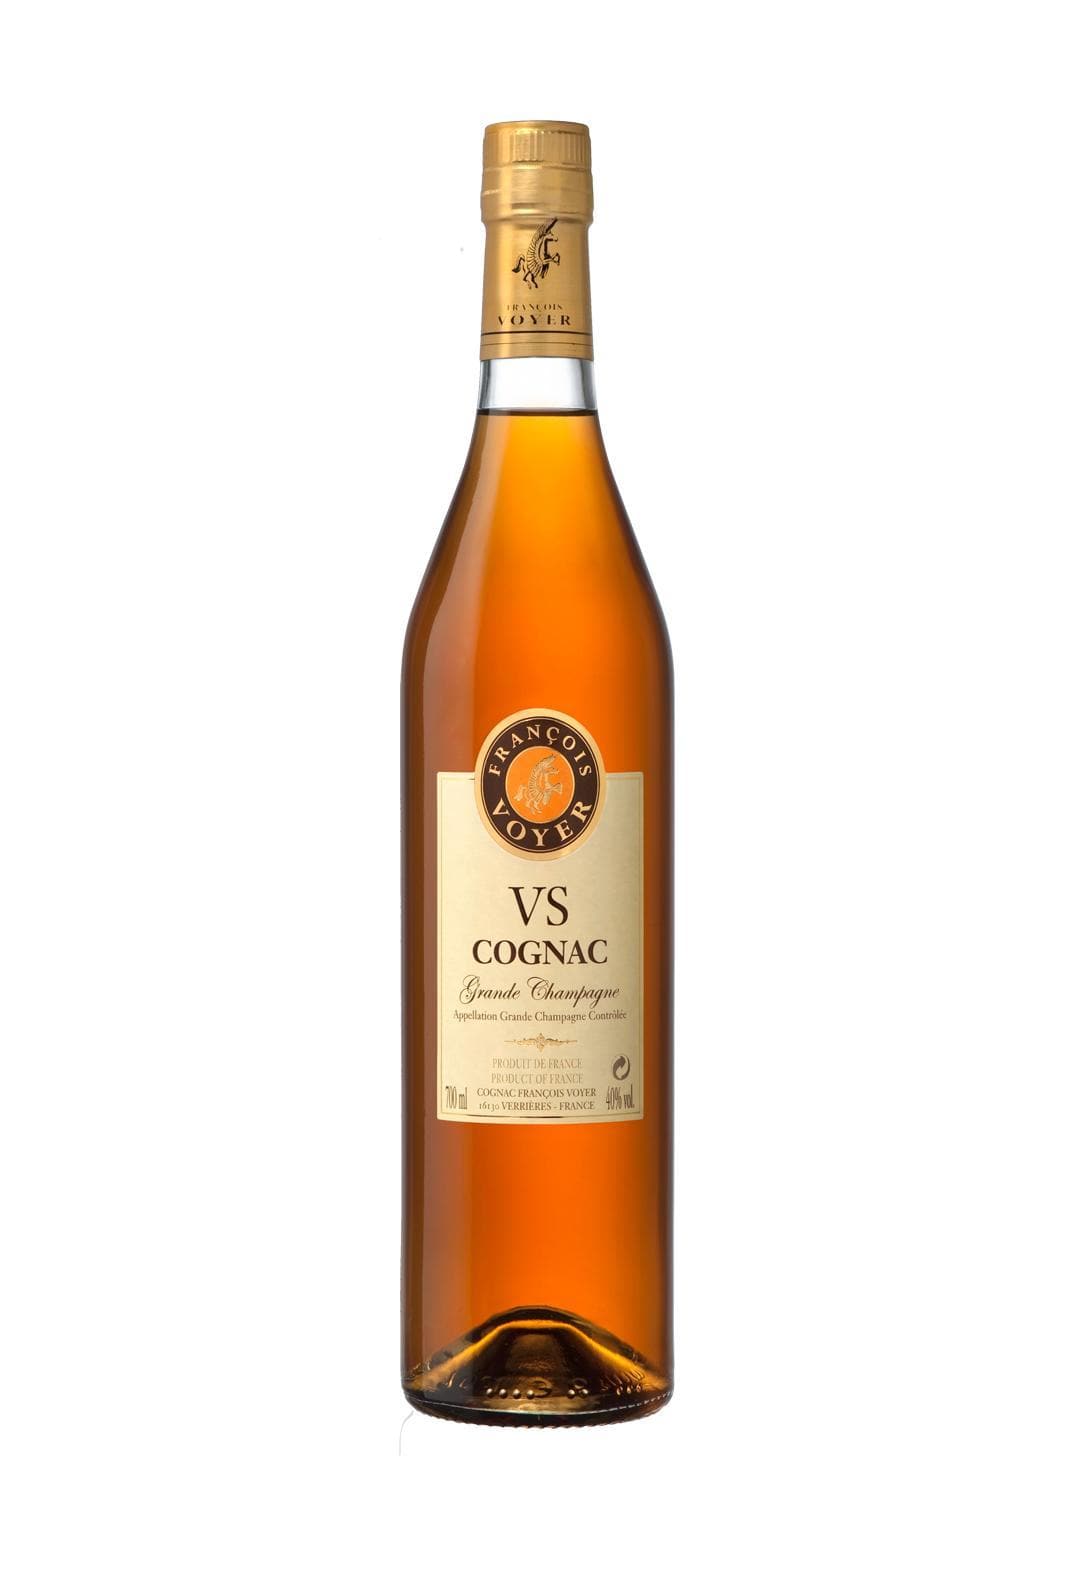 Francois Voyer Cognac VS 40% 700ml | Brandy | Shop online at Spirits of France